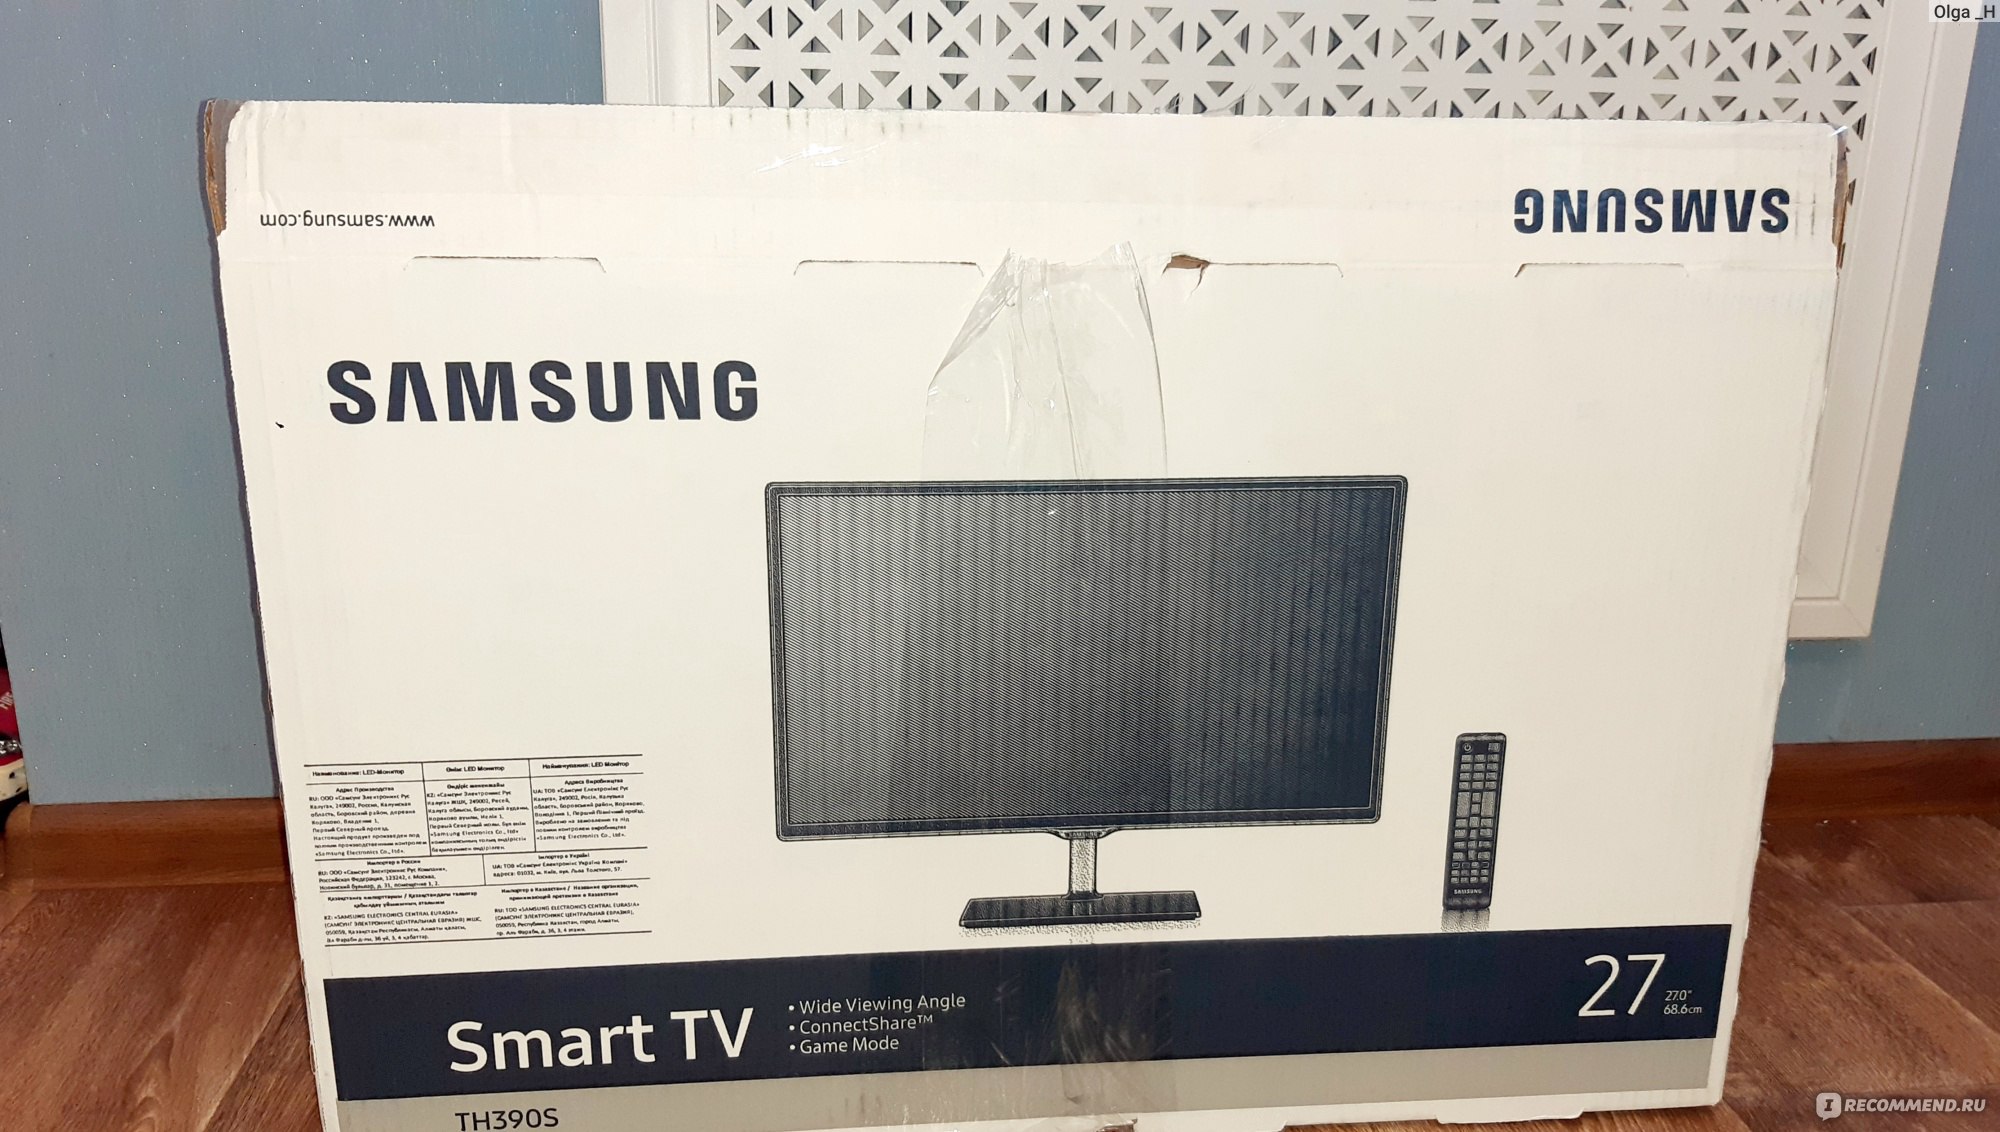 Самсунг 27 телевизор. Led-televizor-Samsung-t27h390six с чем сравнивают. Th390s Samsung габариты 27 дюймов.